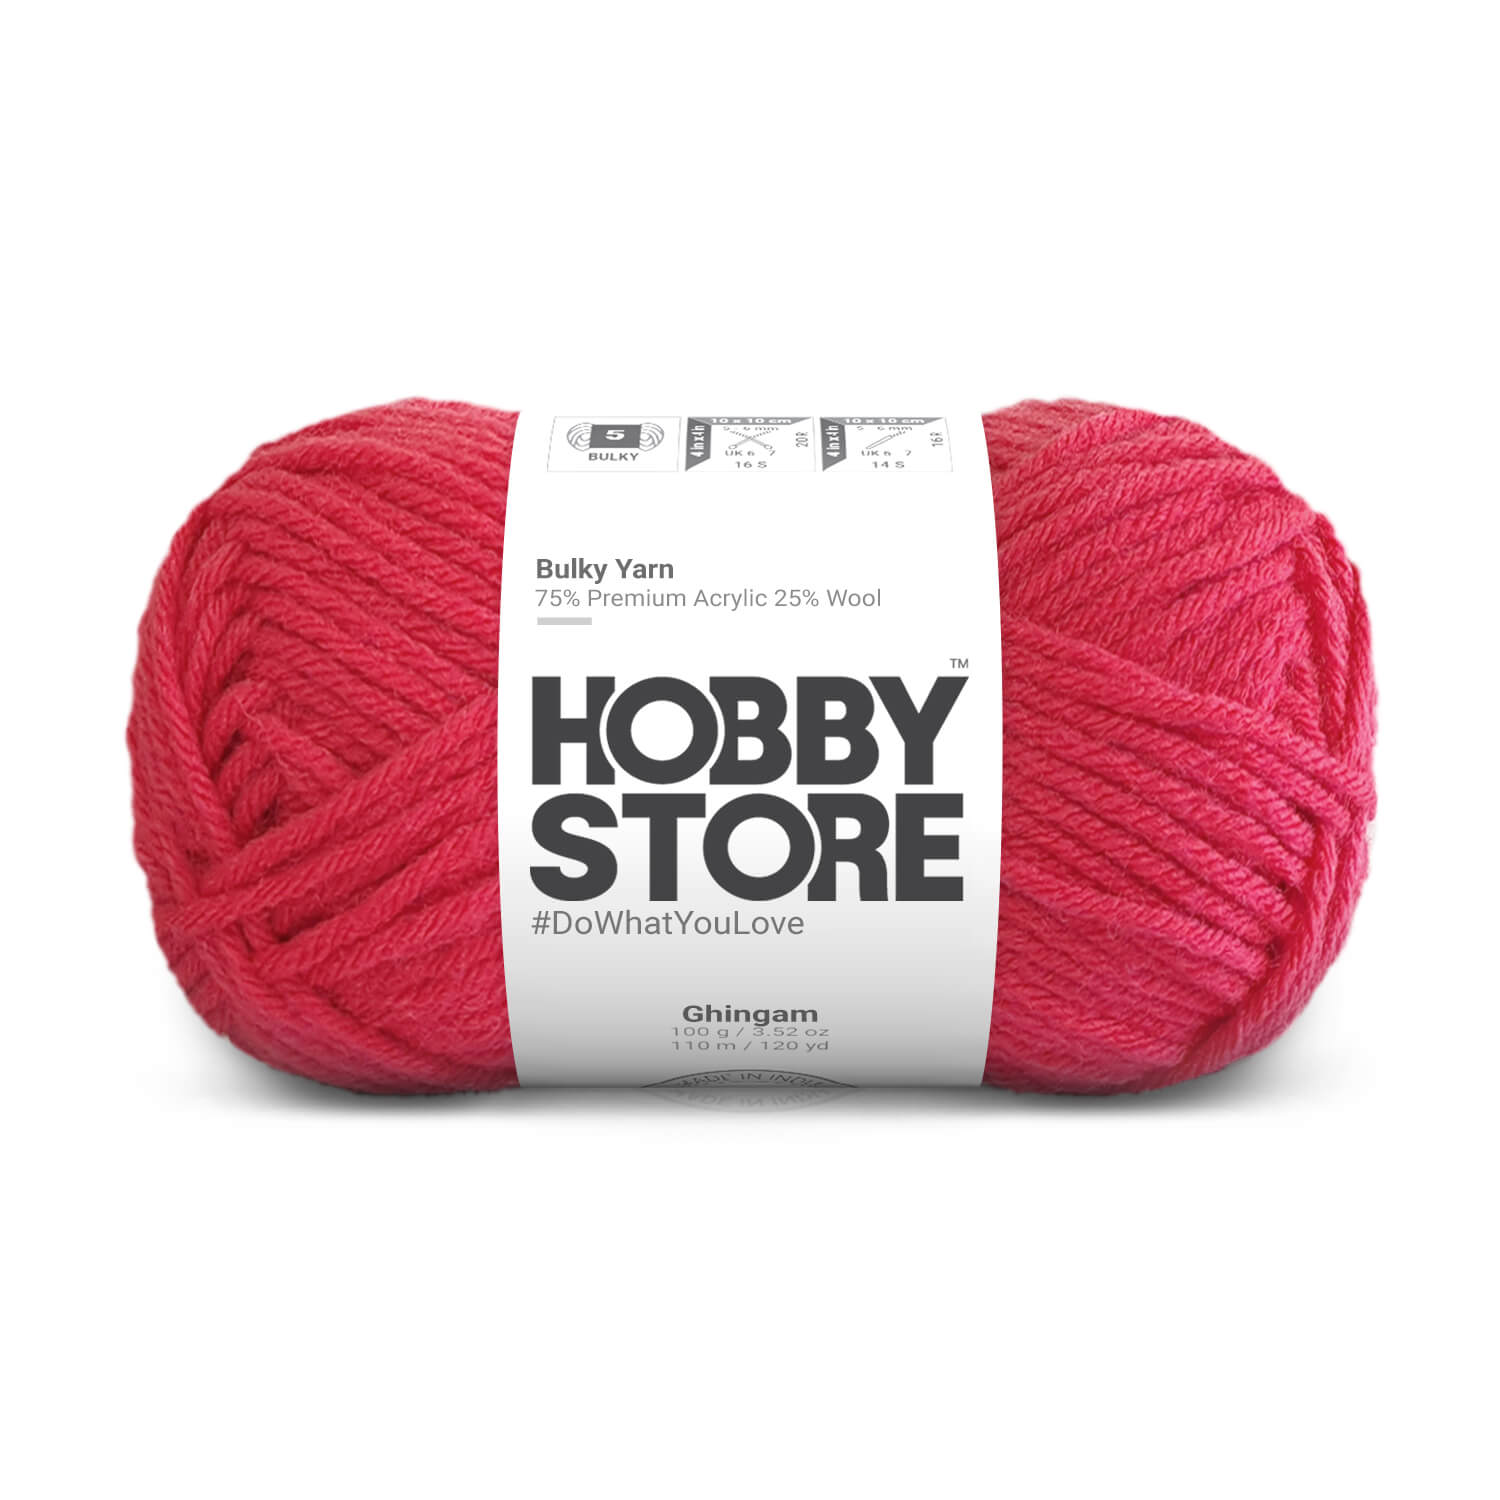 Bulky Yarn by Hobby Store - Ghingam 6027